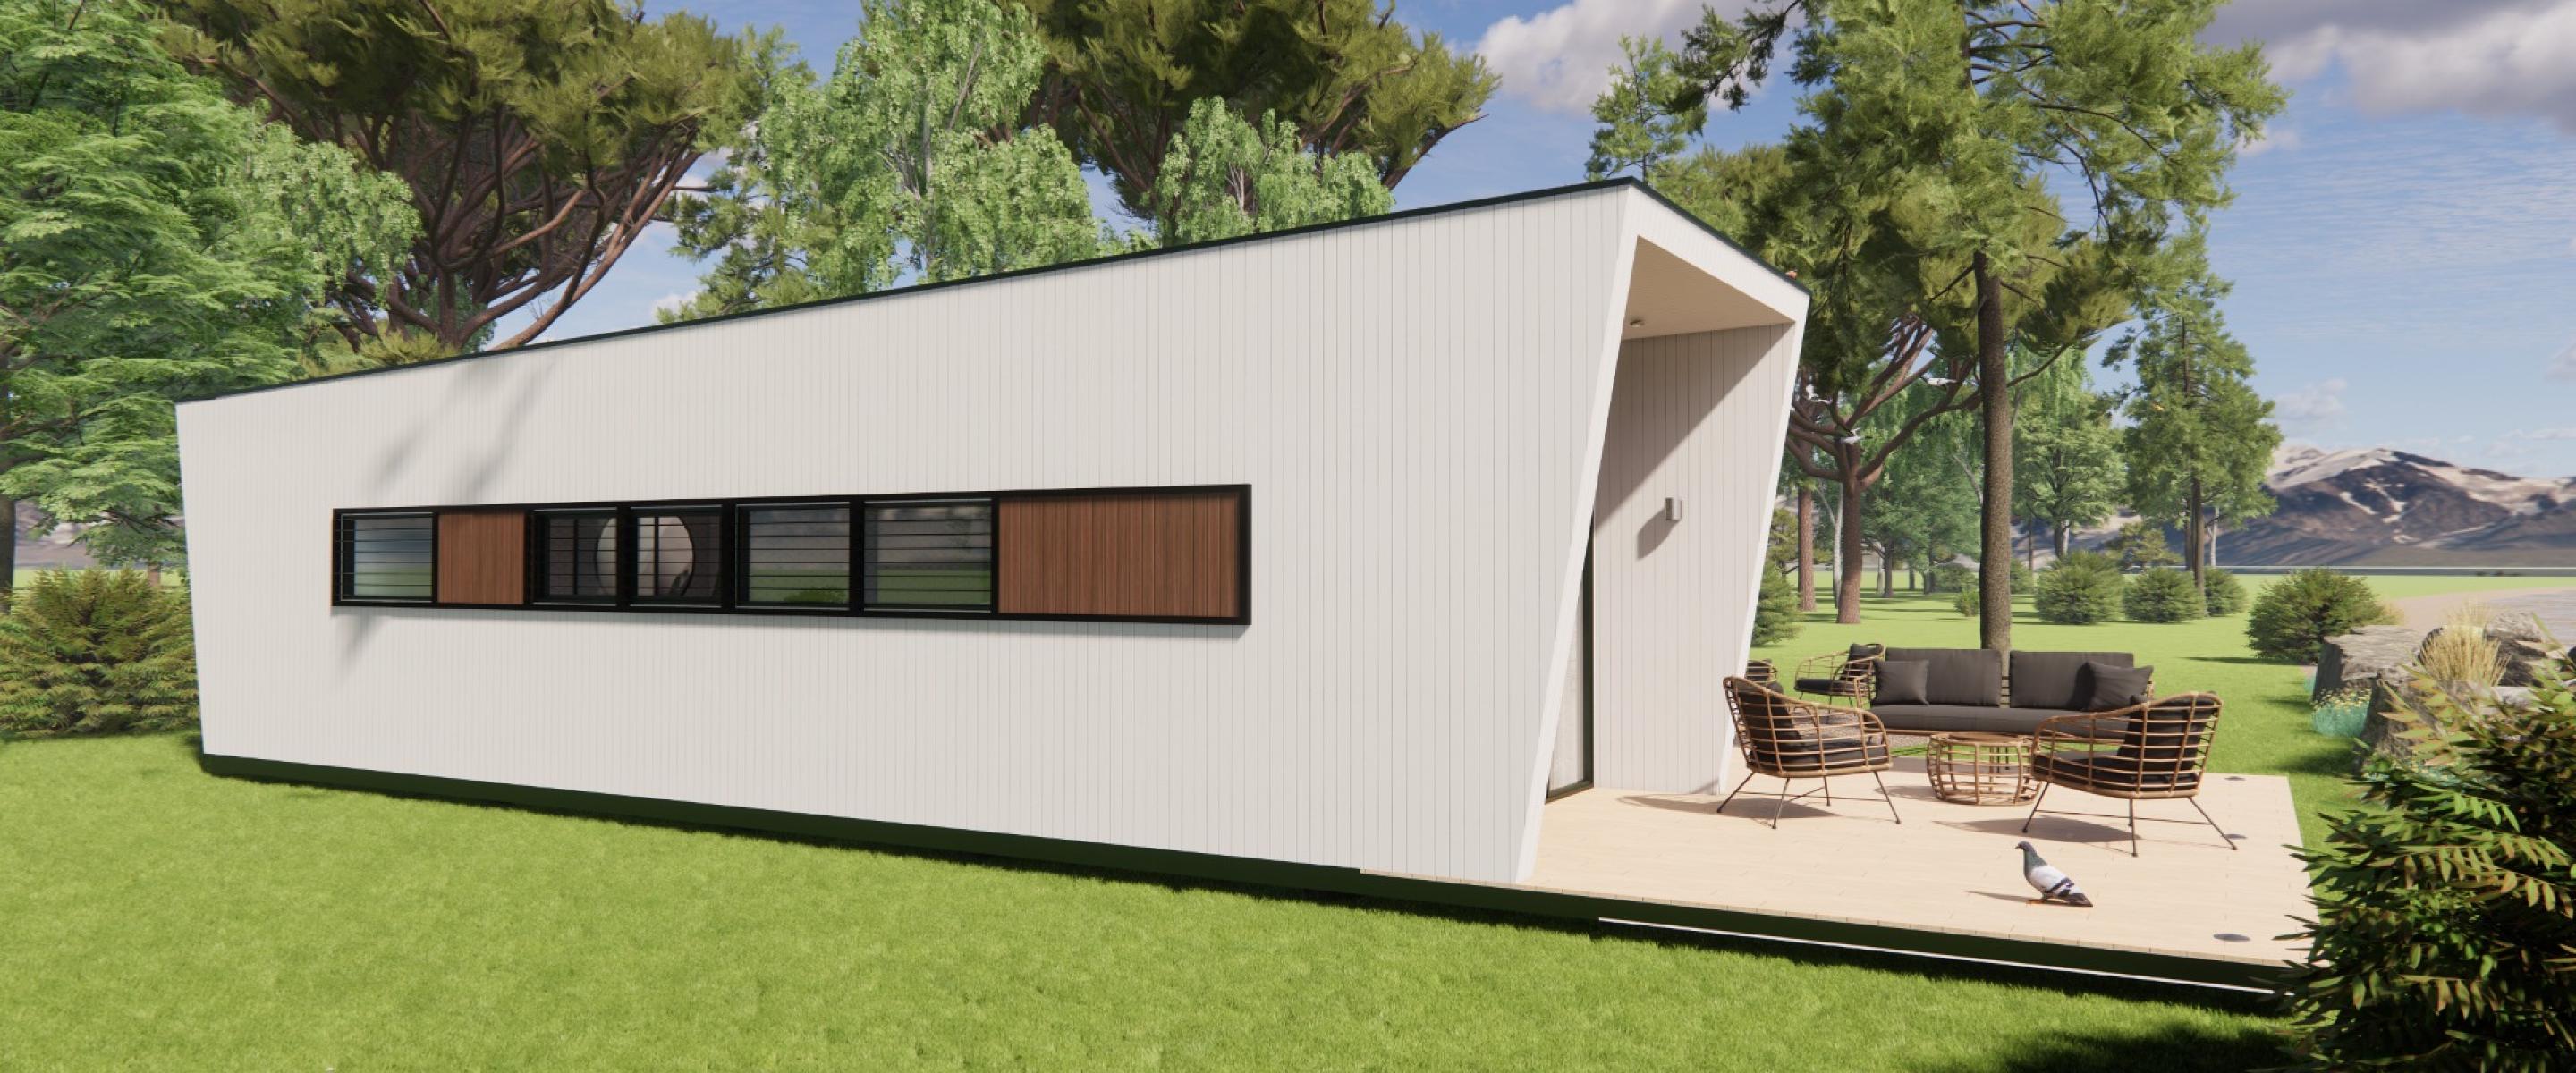 Summit Modular Tiny Home render